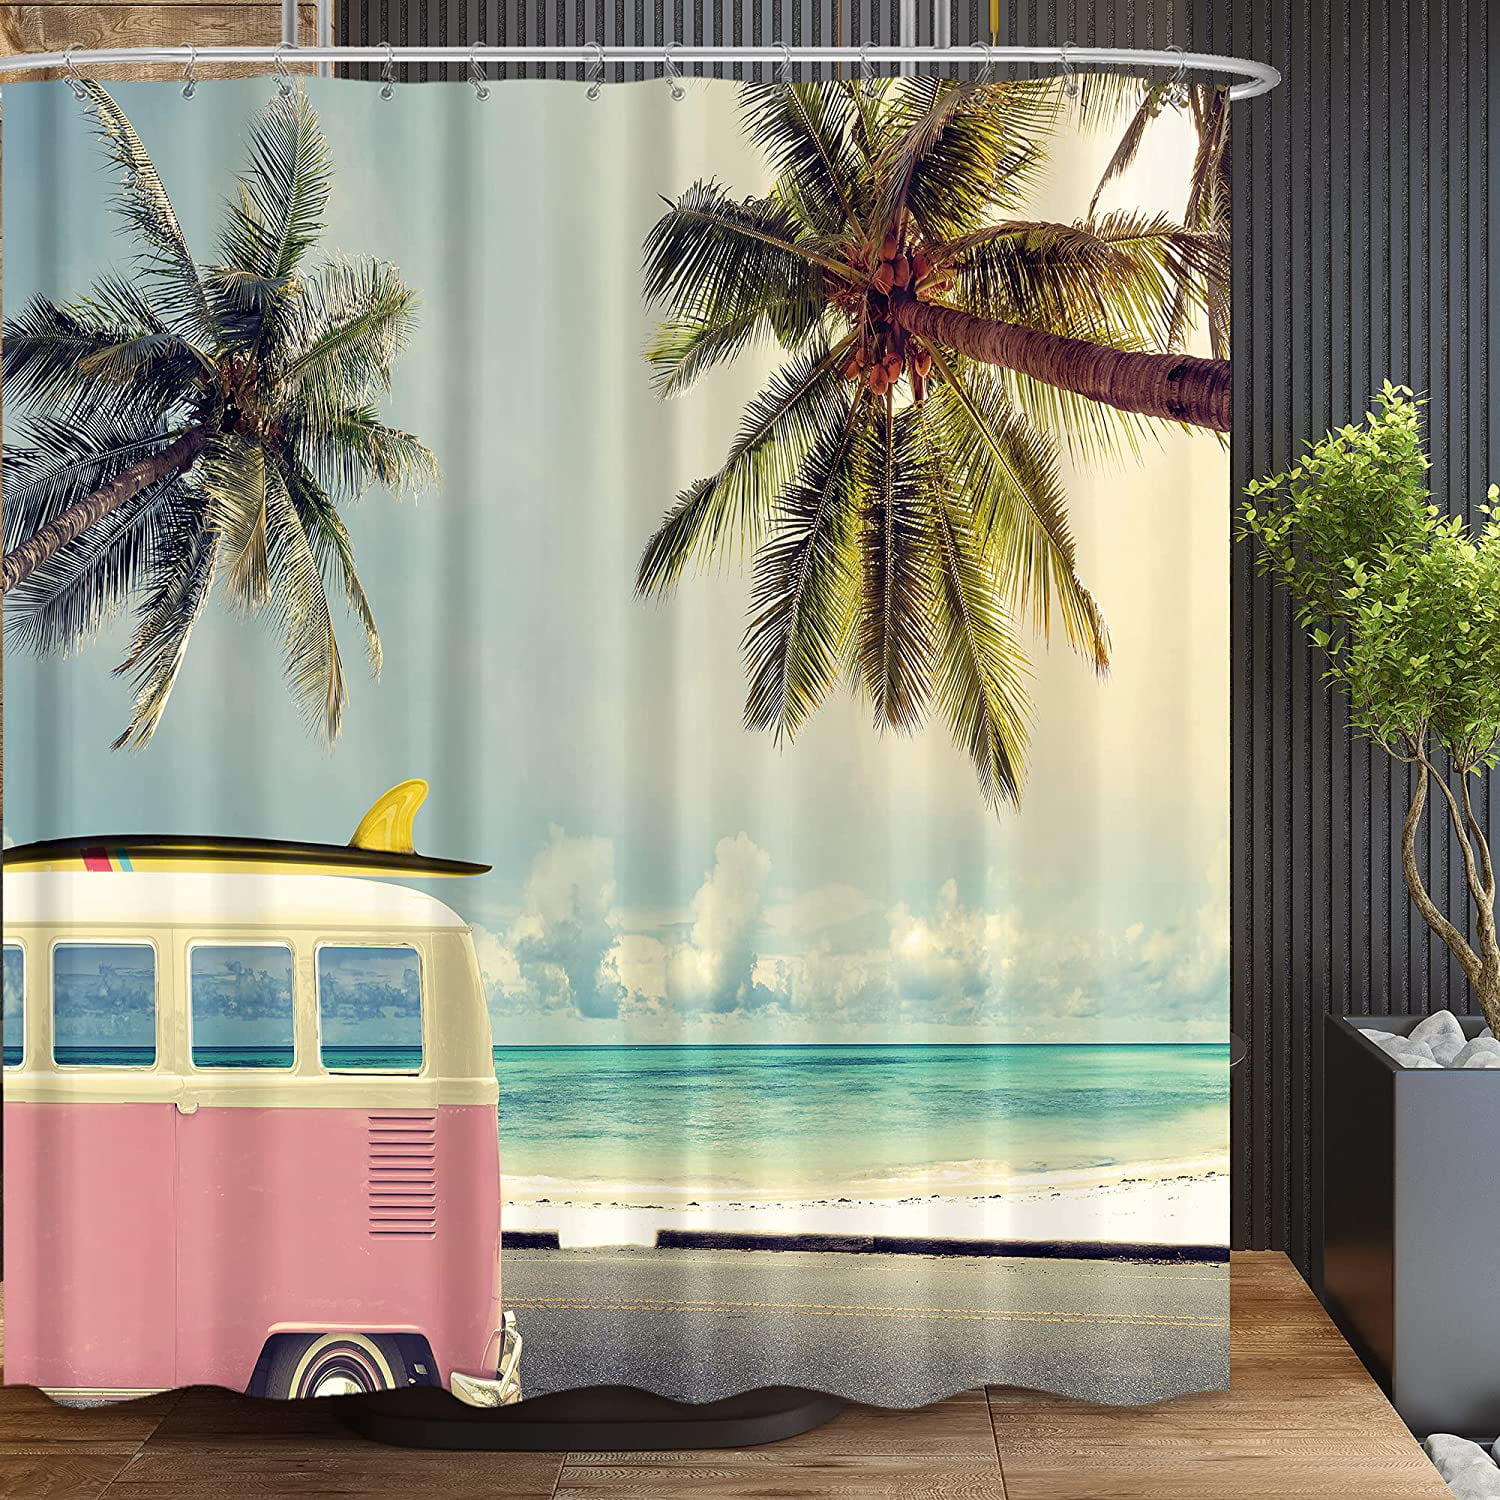 72" Tropical Palm Tree Surf Waterproof Fabric Shower Curtain Bath Accessory Set 